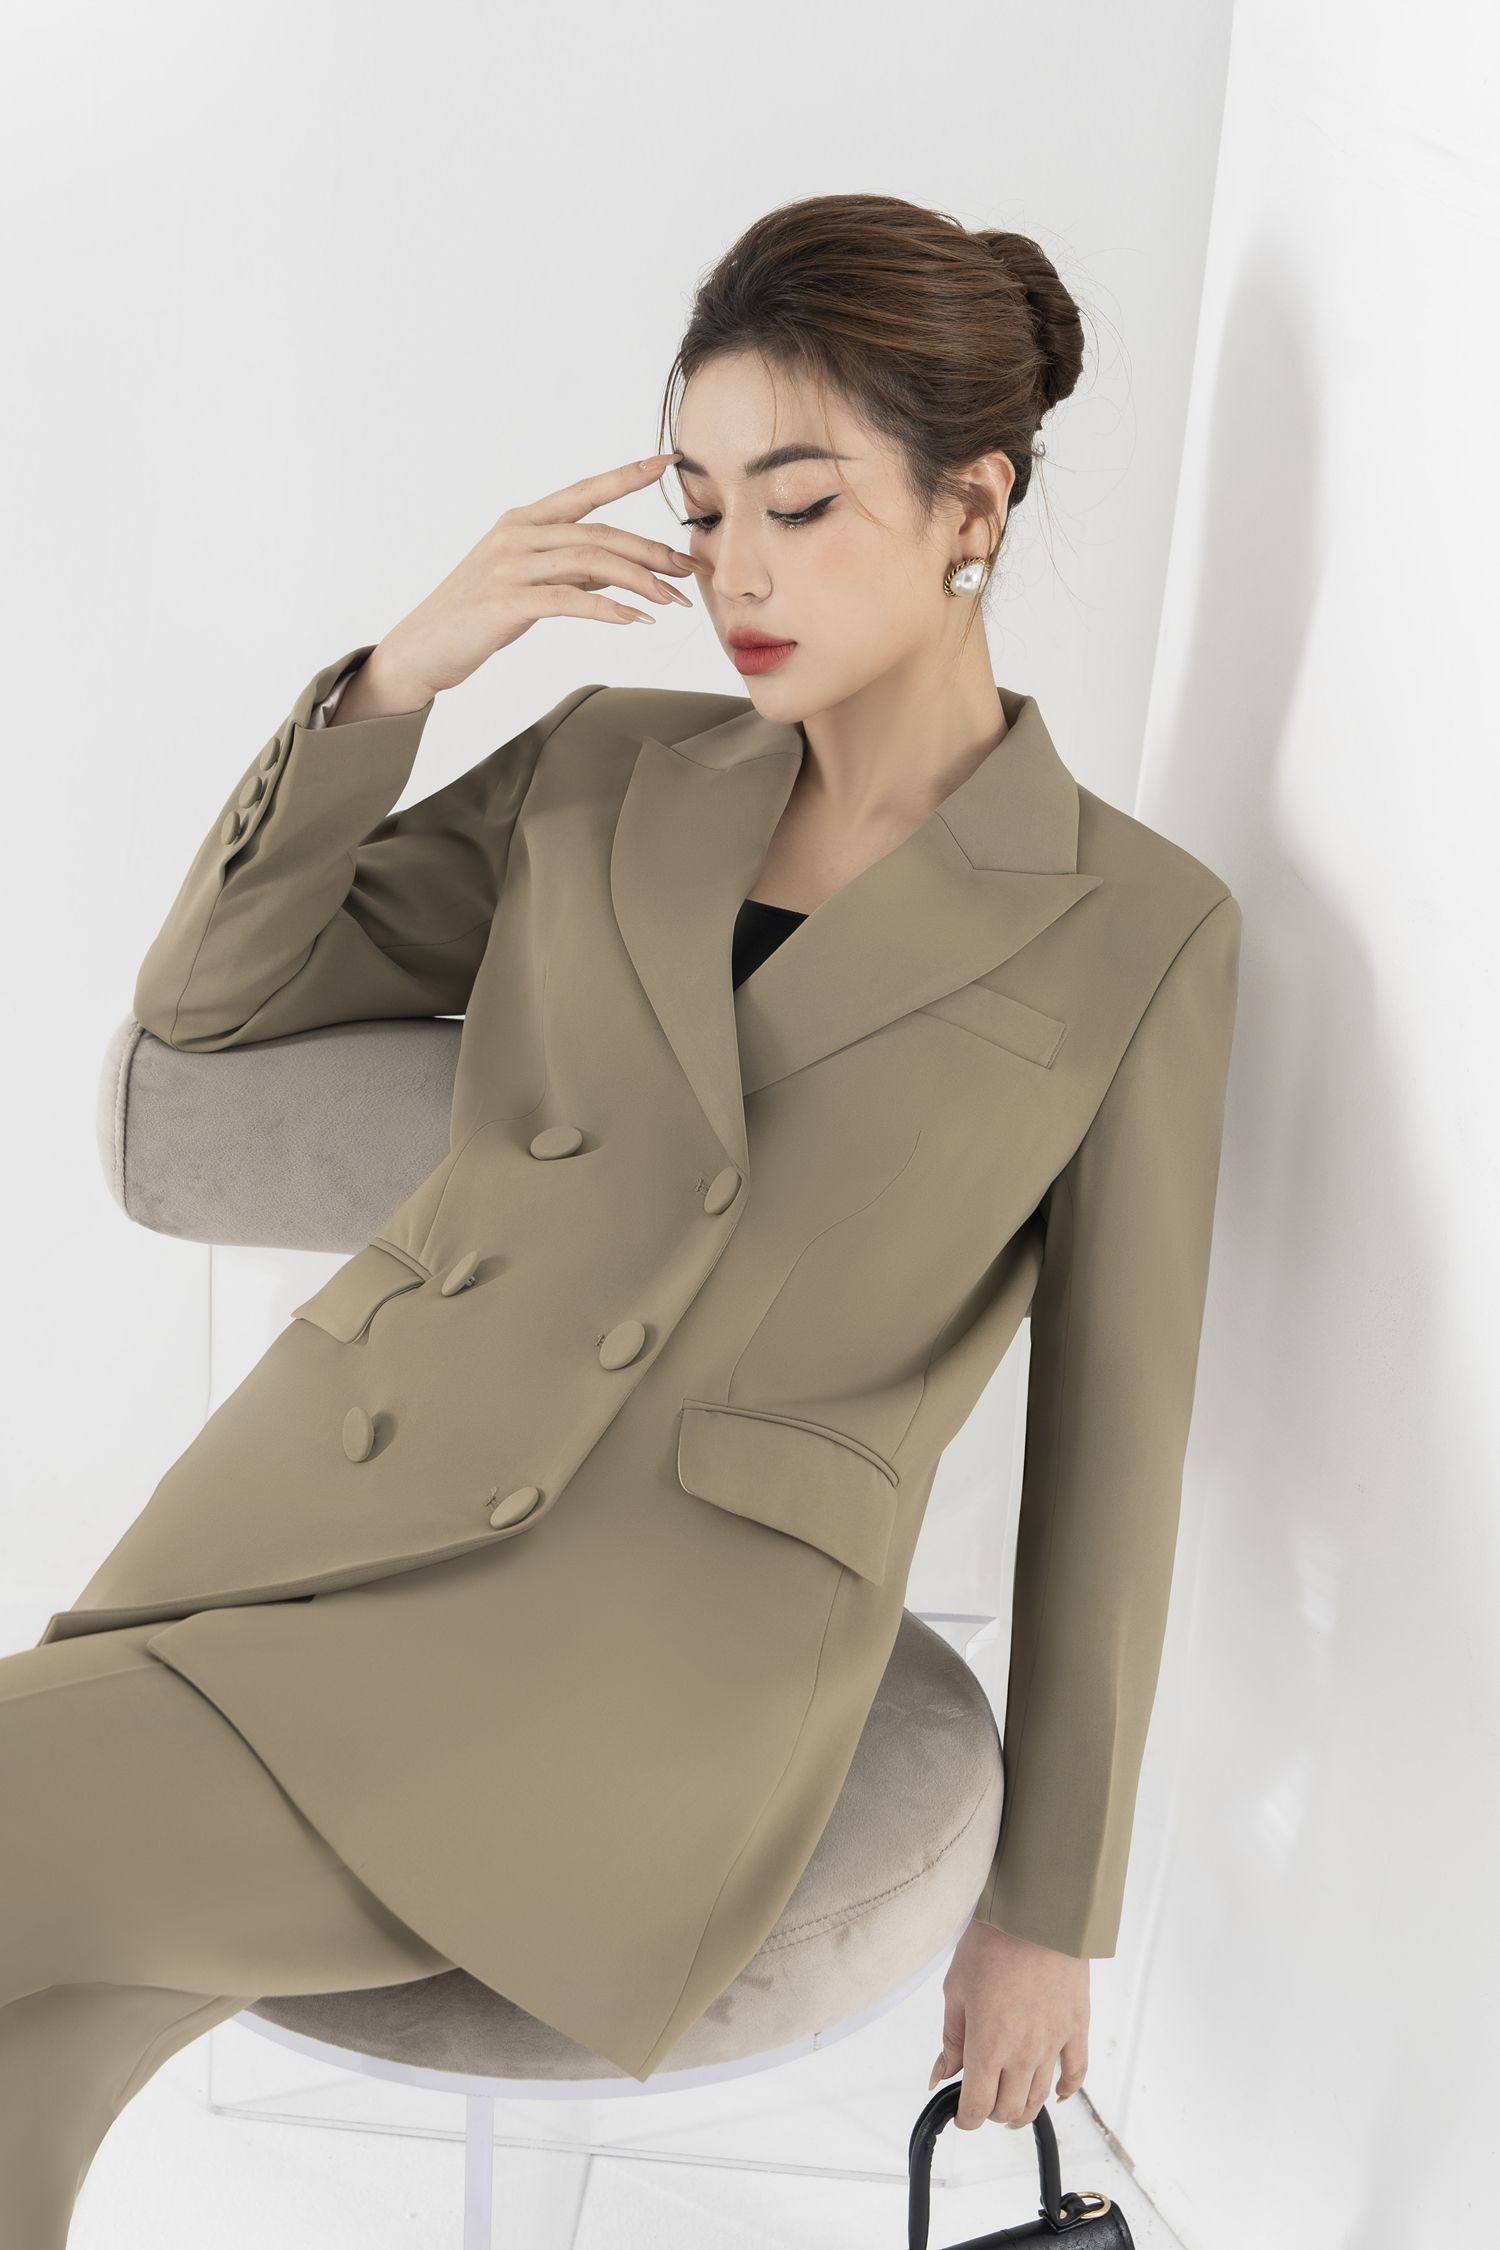 Áo khoác vest, áo blazer nữ họa tiết sọc caro trẻ trung | Lazada.vn